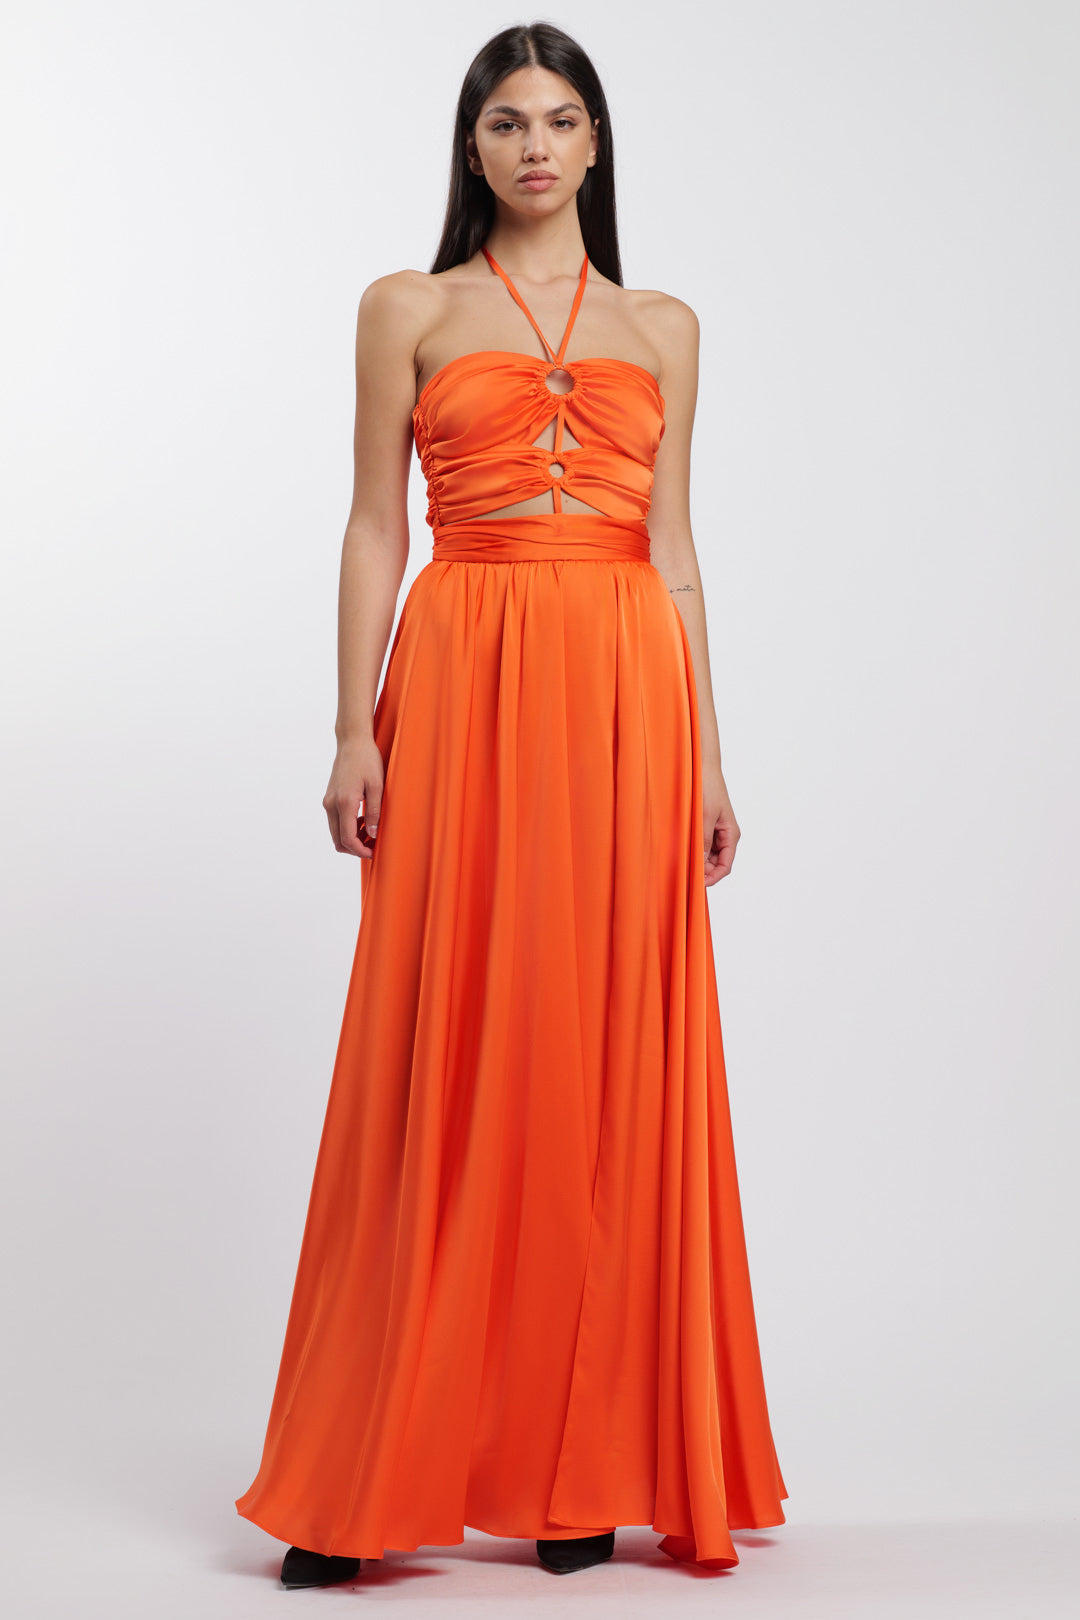 Rings Dress Orange